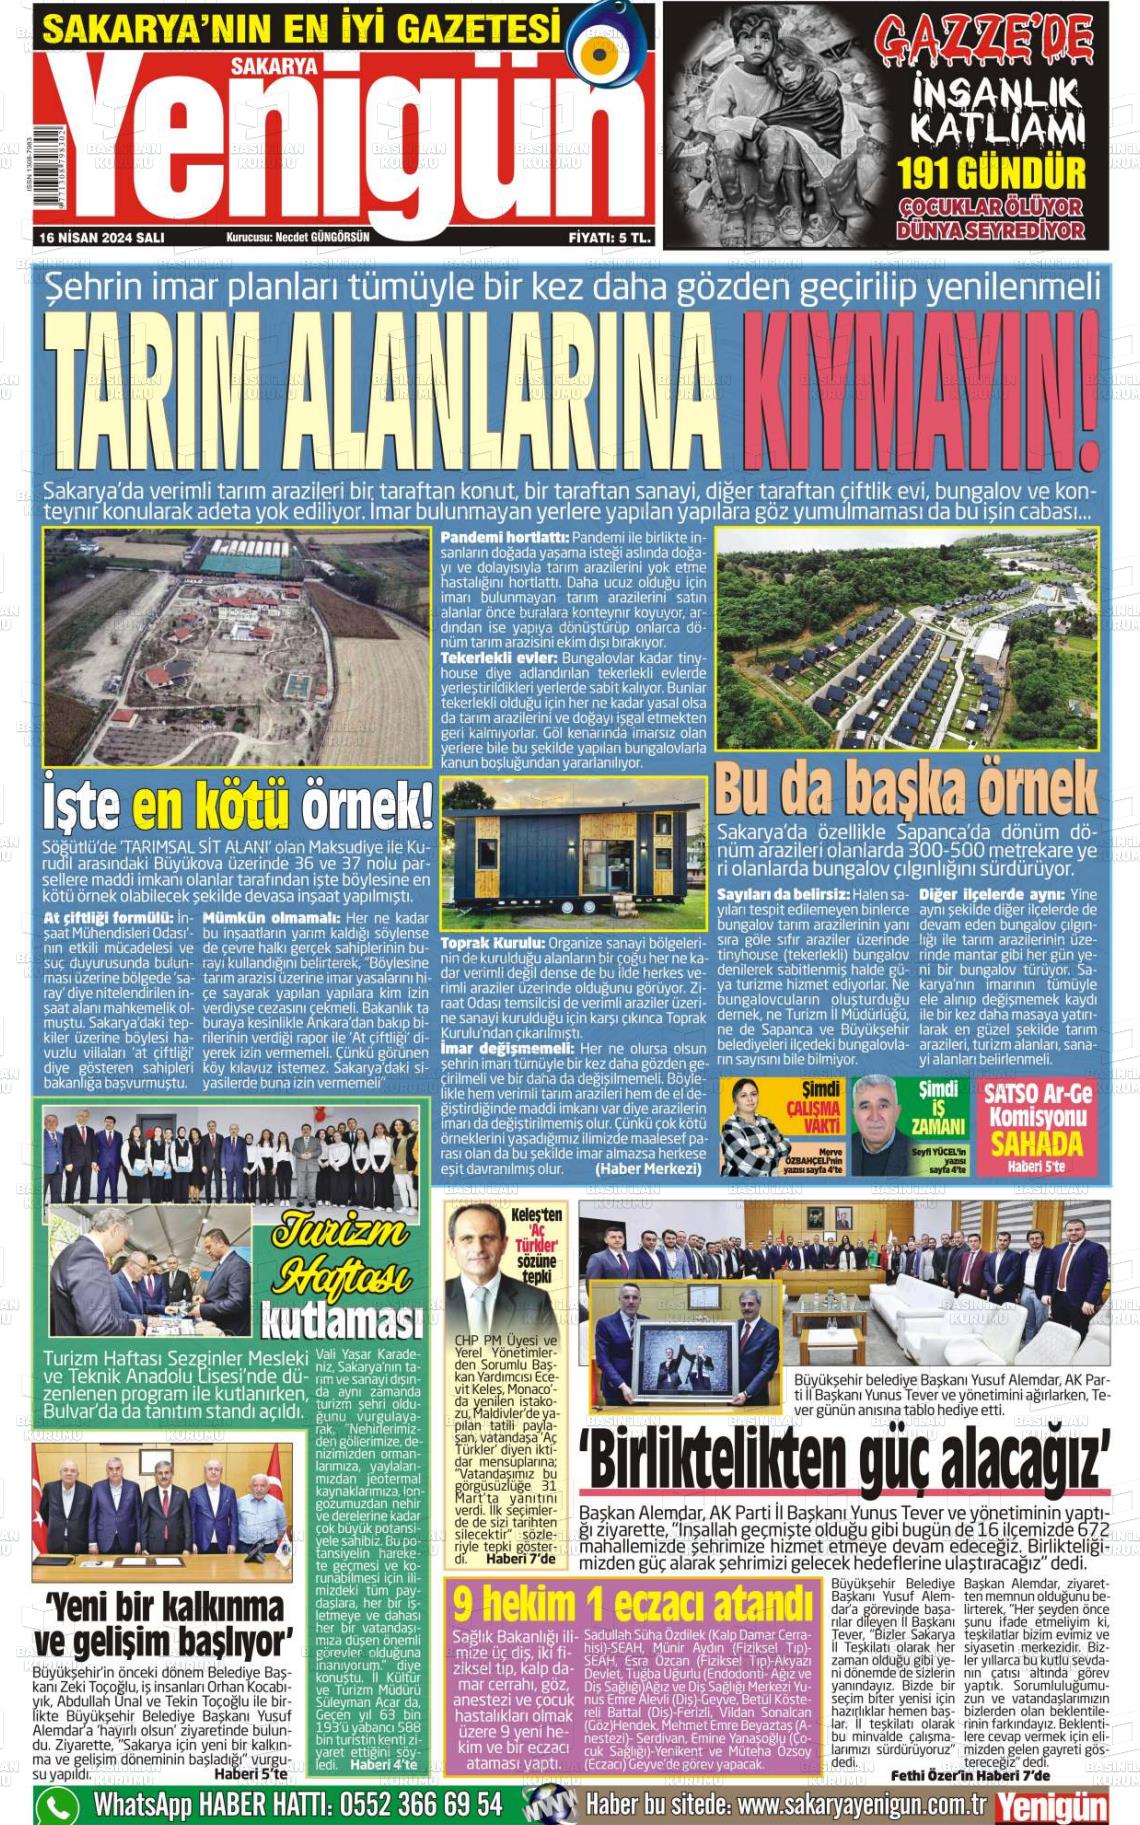 16 Nisan 2024 Sakarya Yenigün Gazete Manşeti